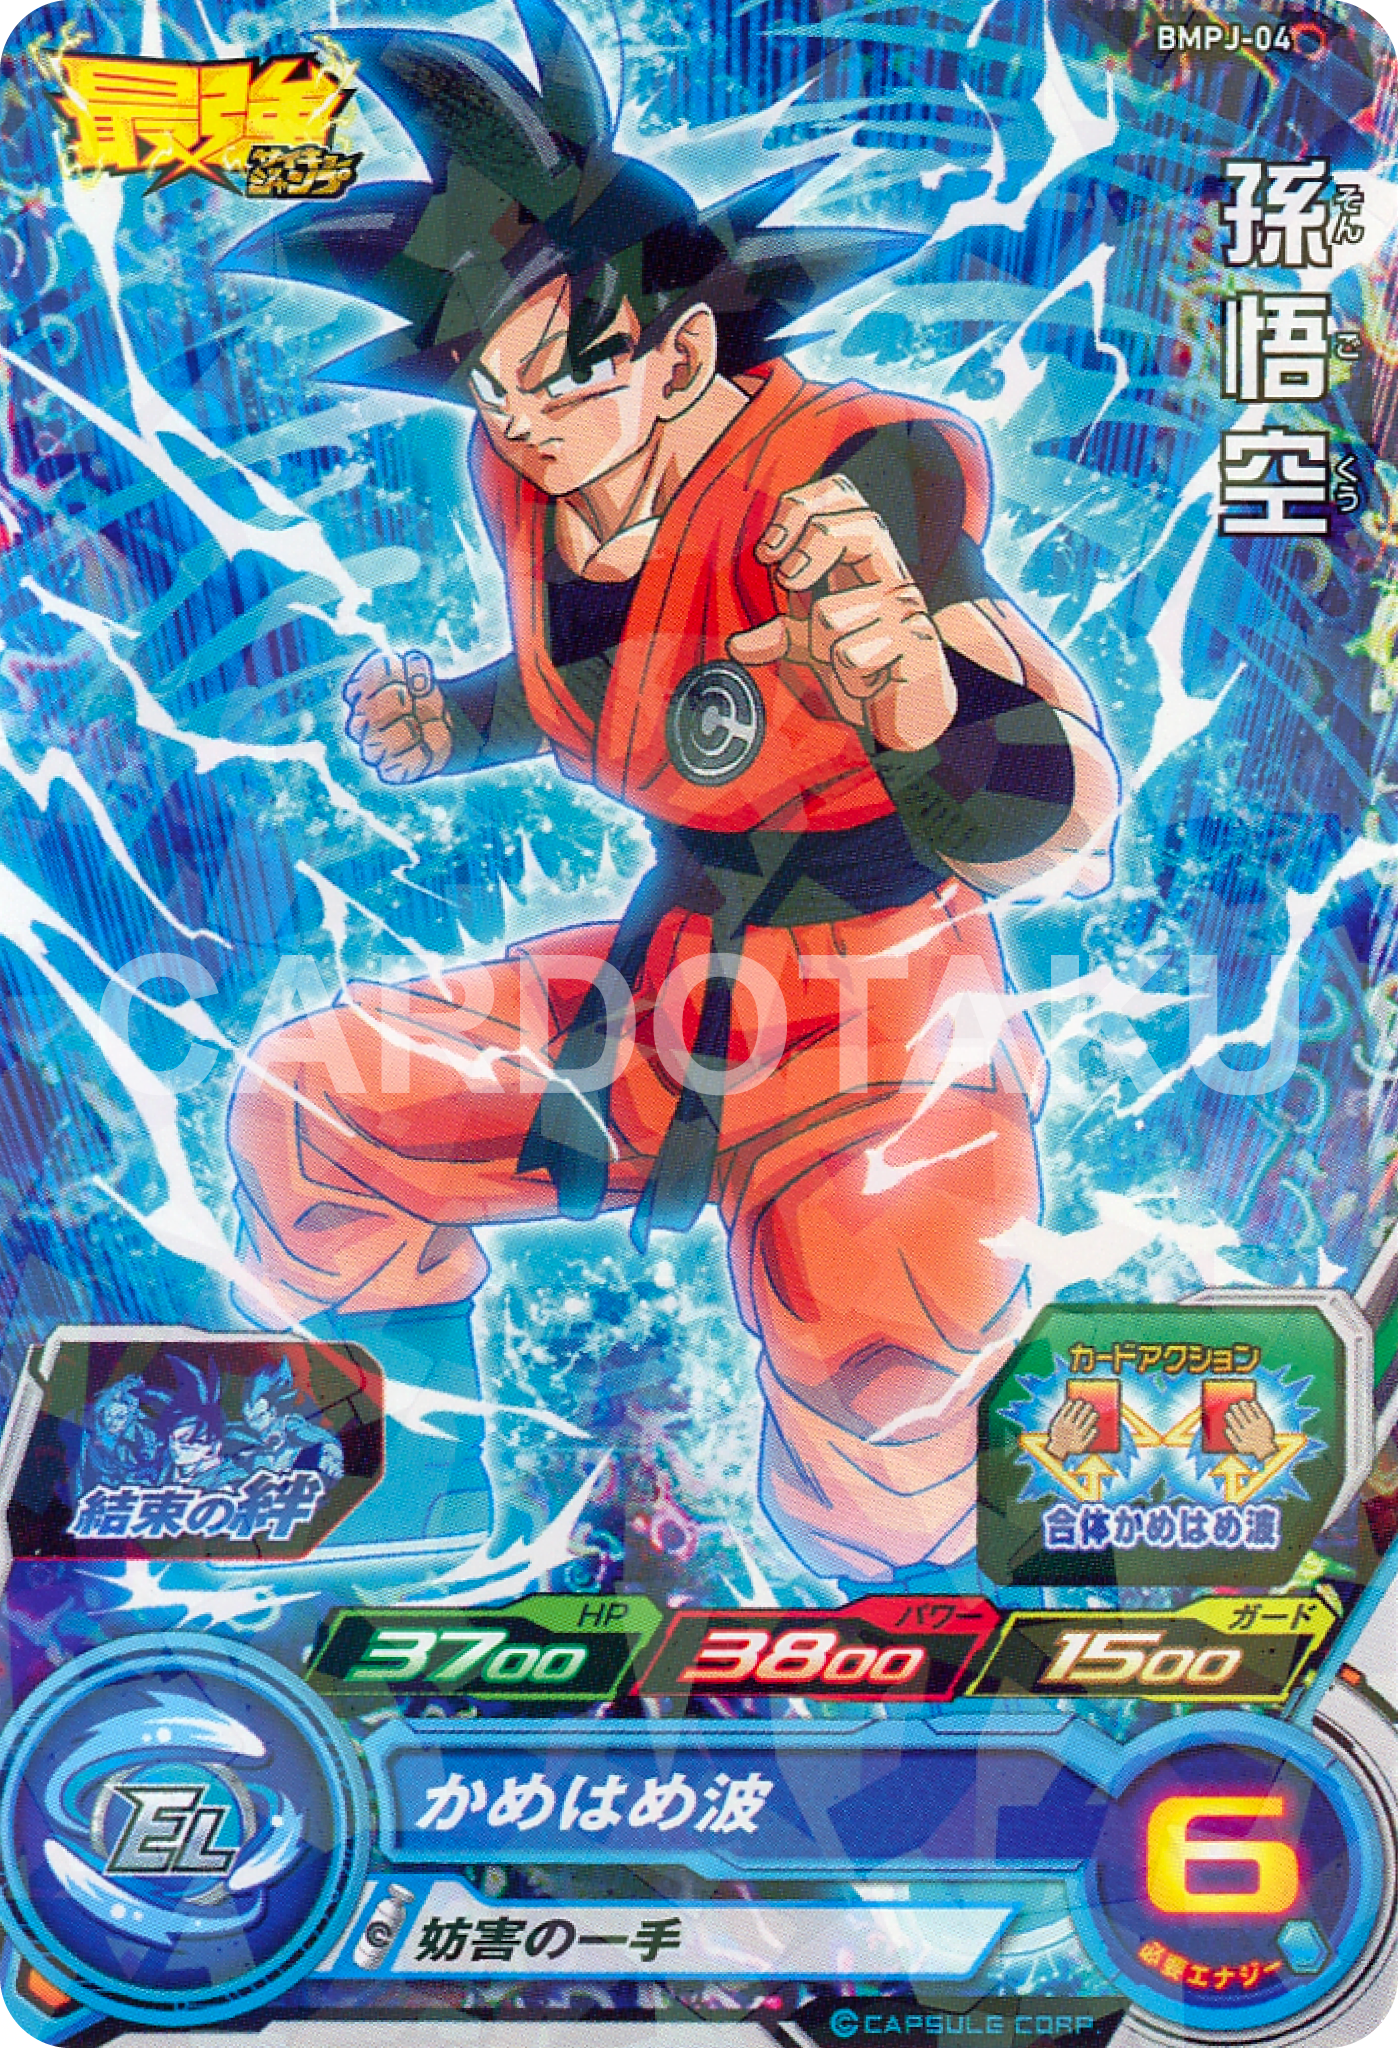 SUPER DRAGON BALL HEROES BMPJ-04 Son Goku